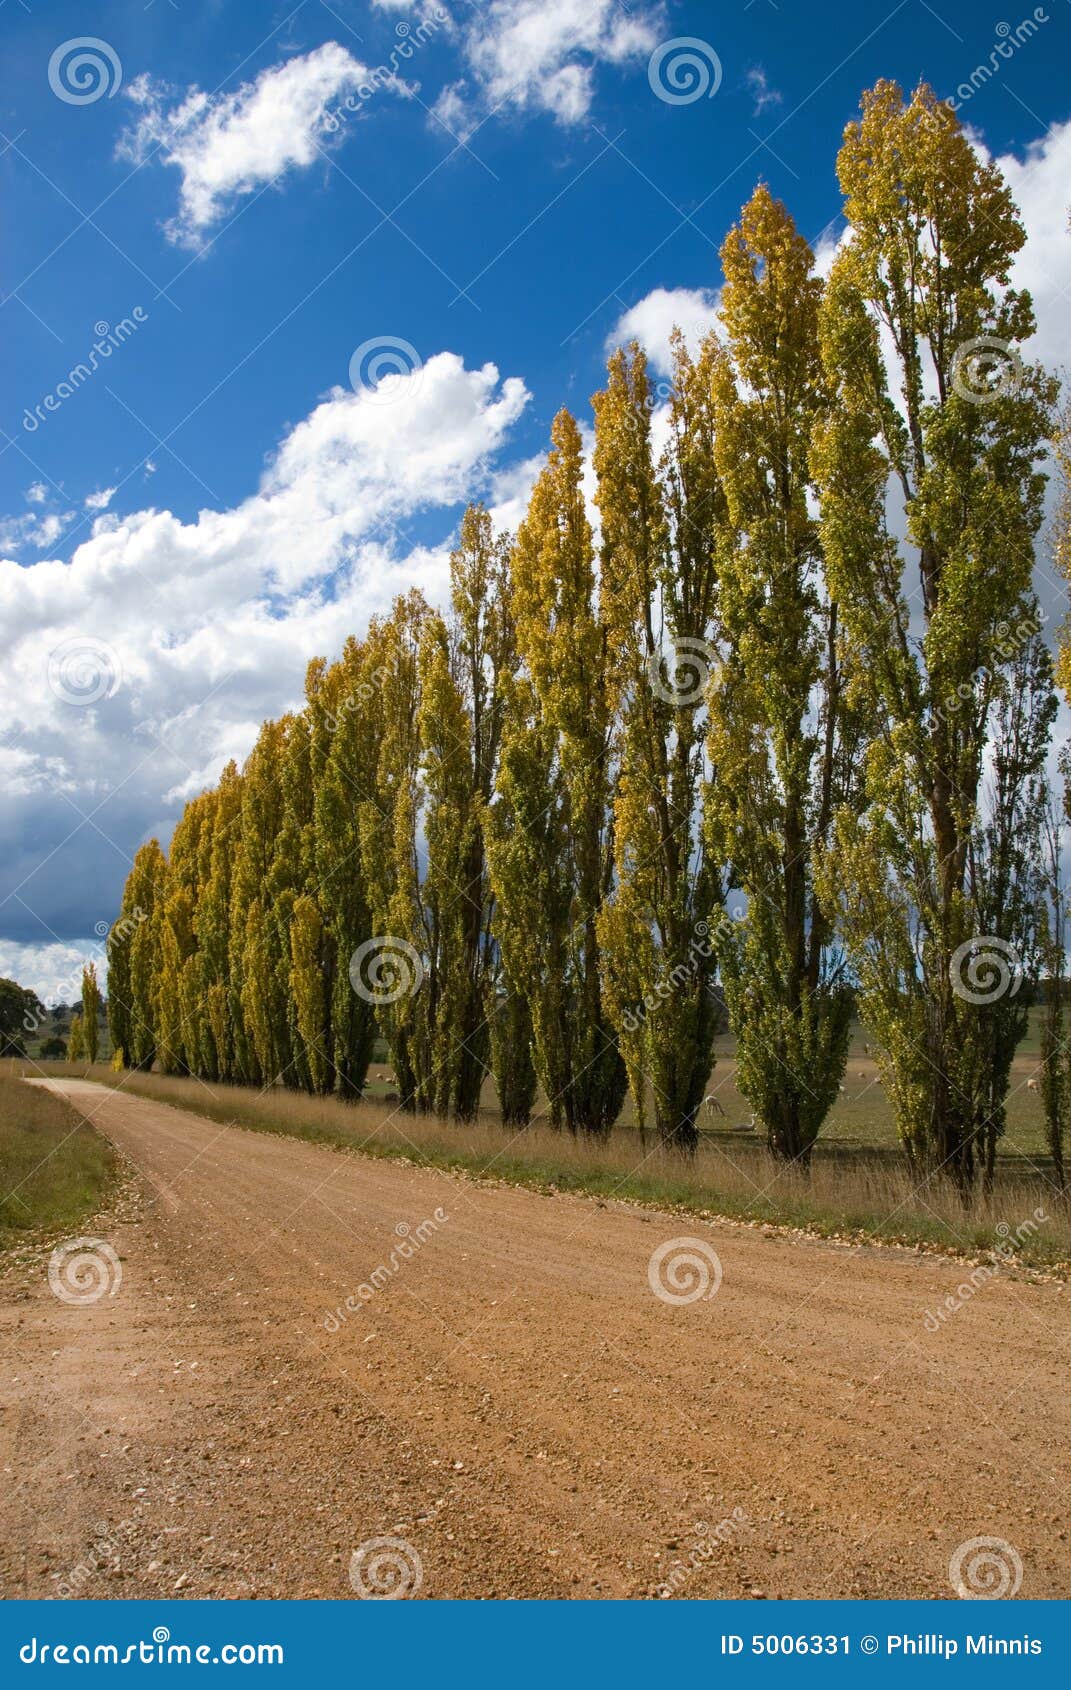 a row of poplars